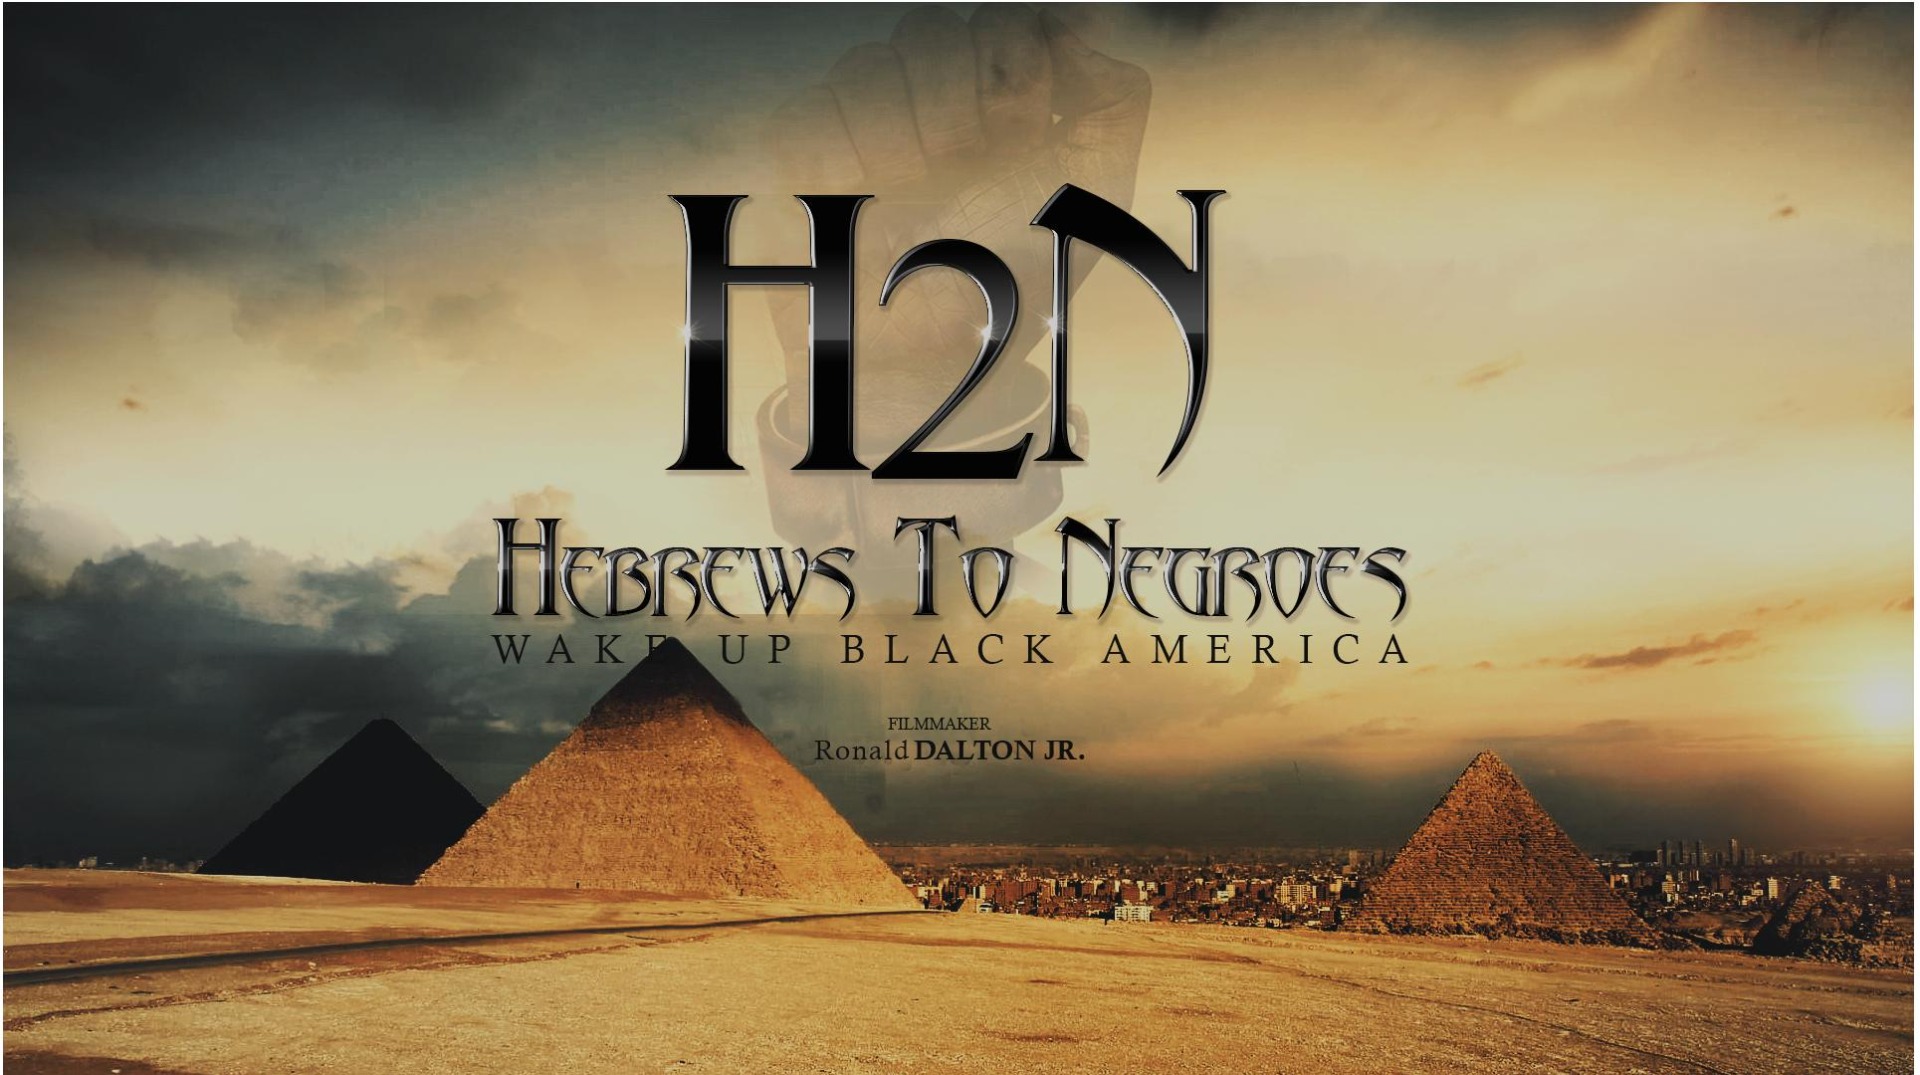 Amazon, antisemitik olduğu iddia edilen "Hebrews to Negroes: Wake Up Black America" filmini satıştan kaldırmayacak